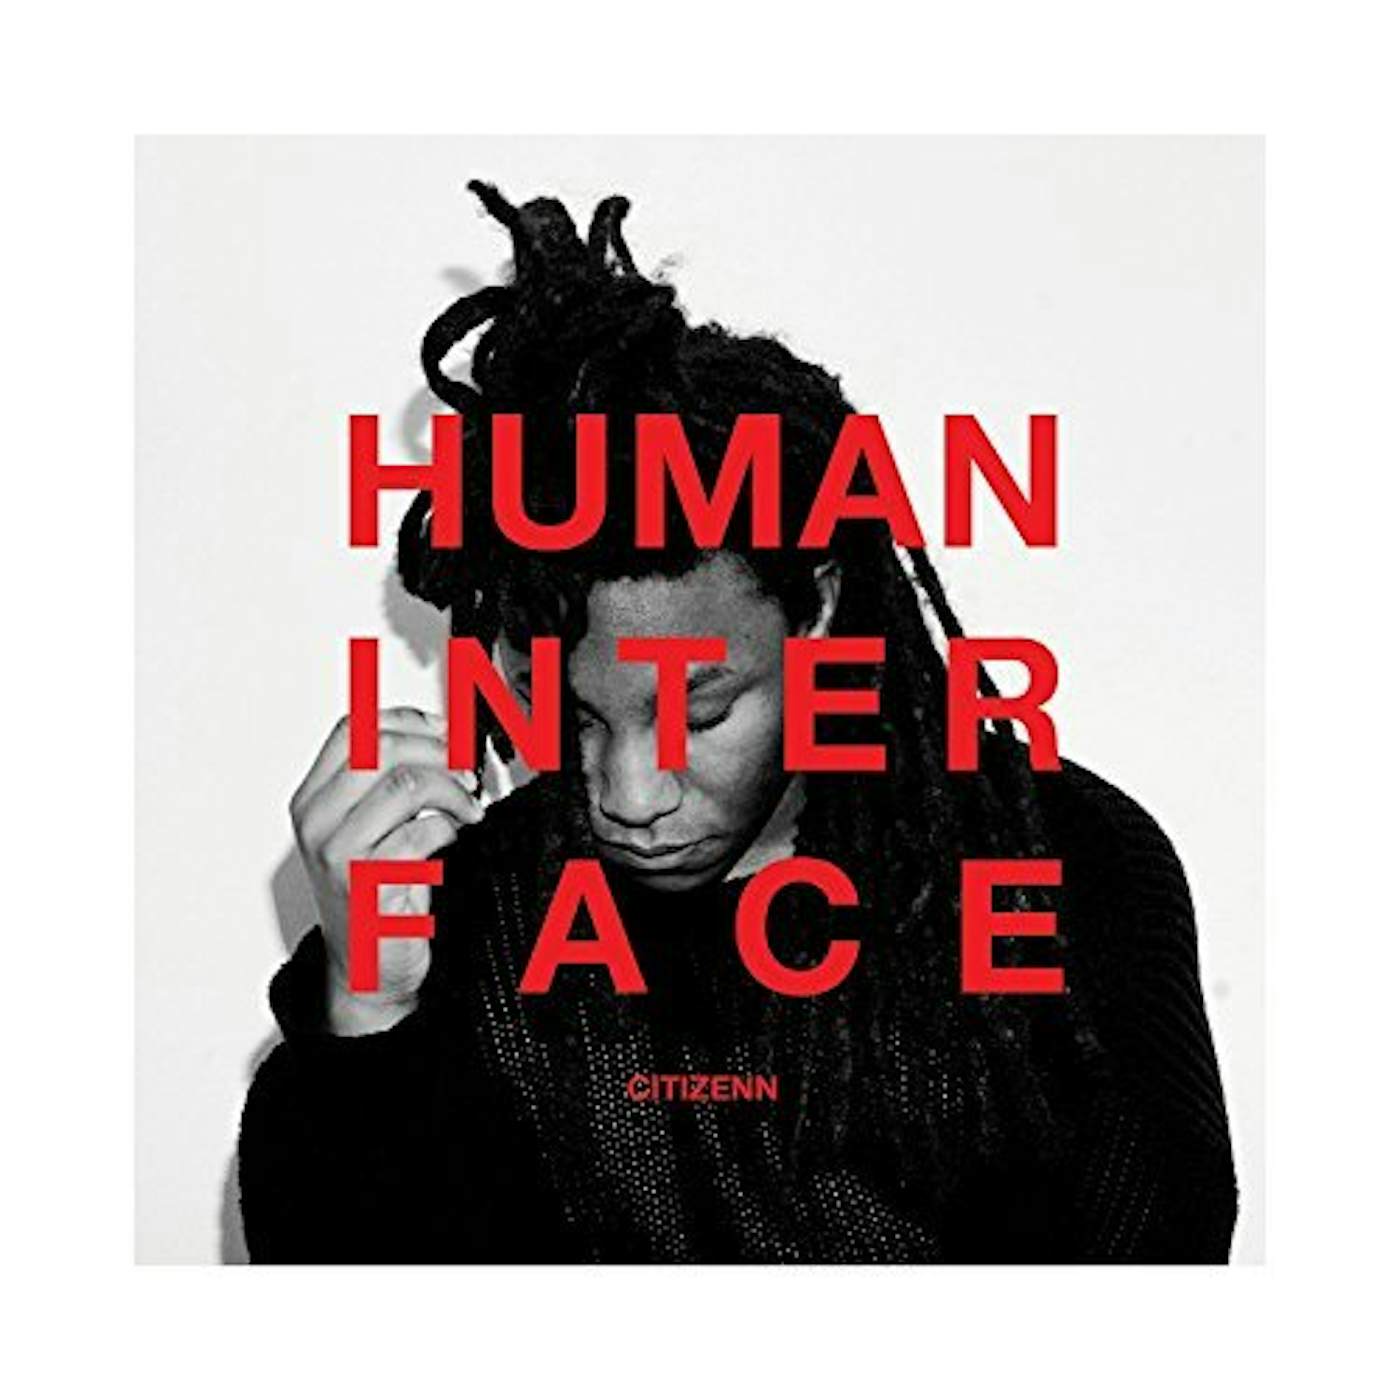 Citizenn HUMAN INTERFACE Vinyl Record - UK Release